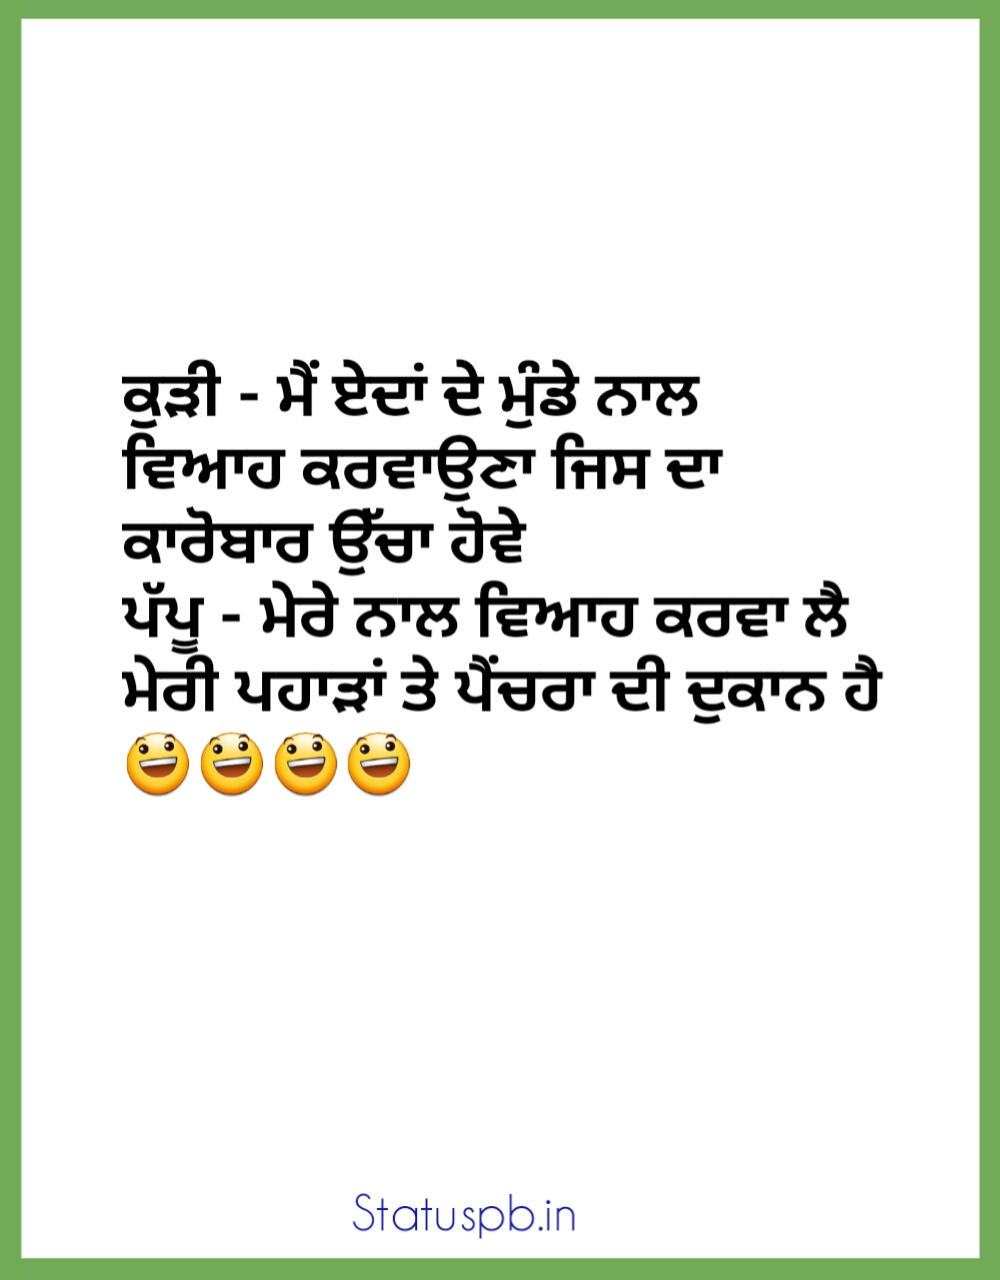 Punjabi Jokes | Funny Jokes in Punjabi | Punjabi Chutkule - STATUSPB